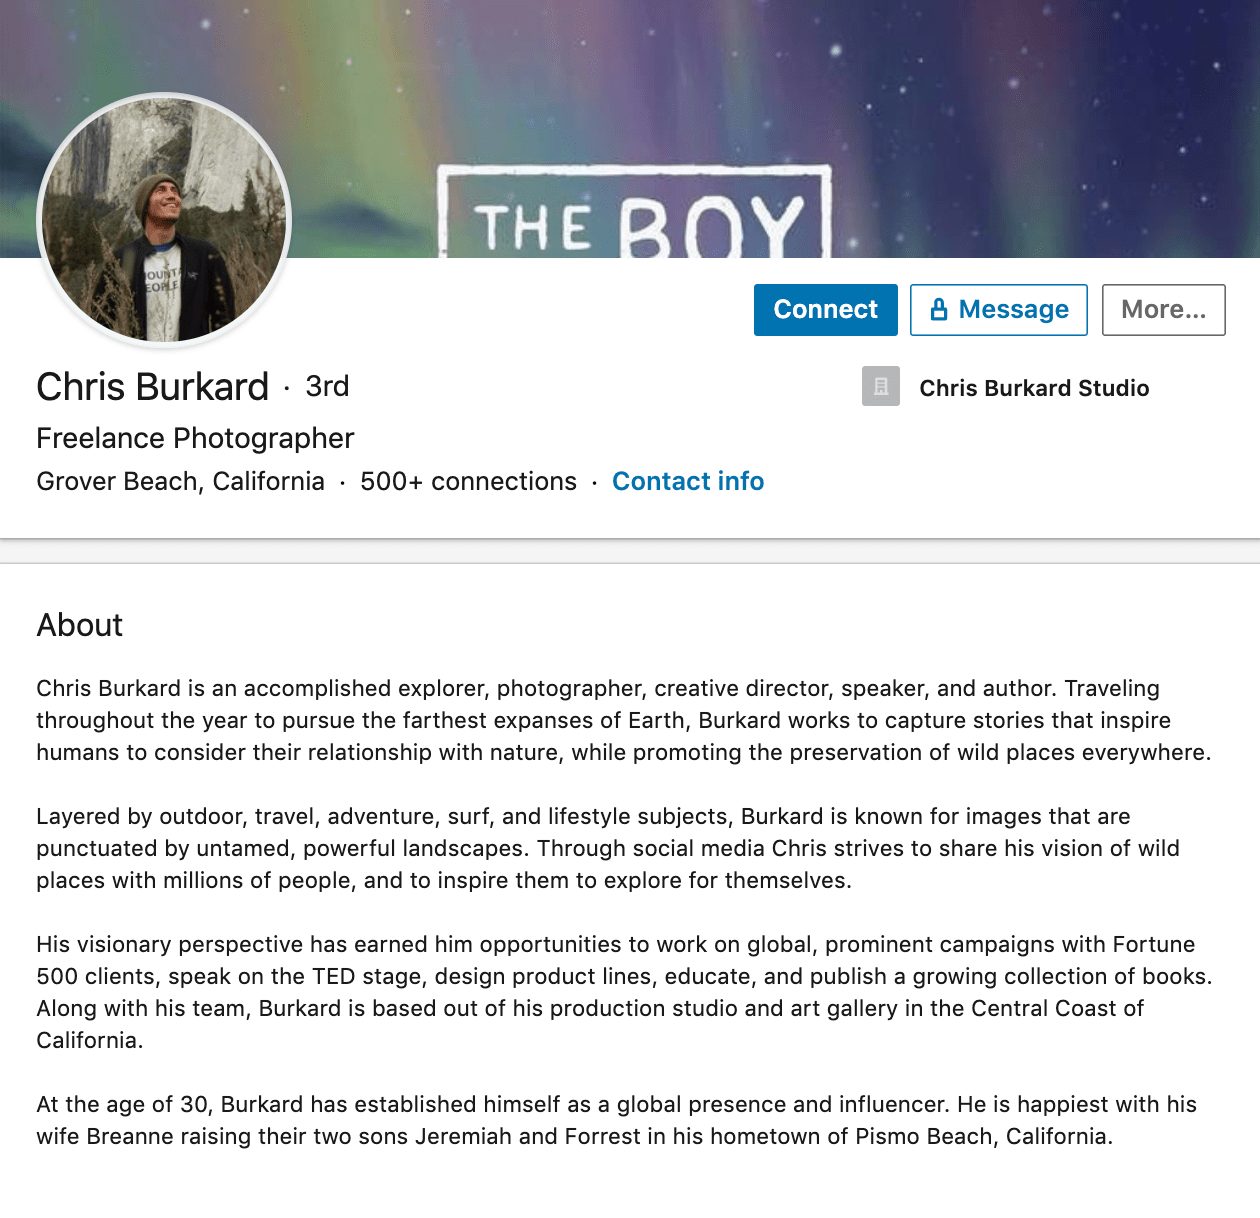 Chris Burkard's professional bio on LinkedIn